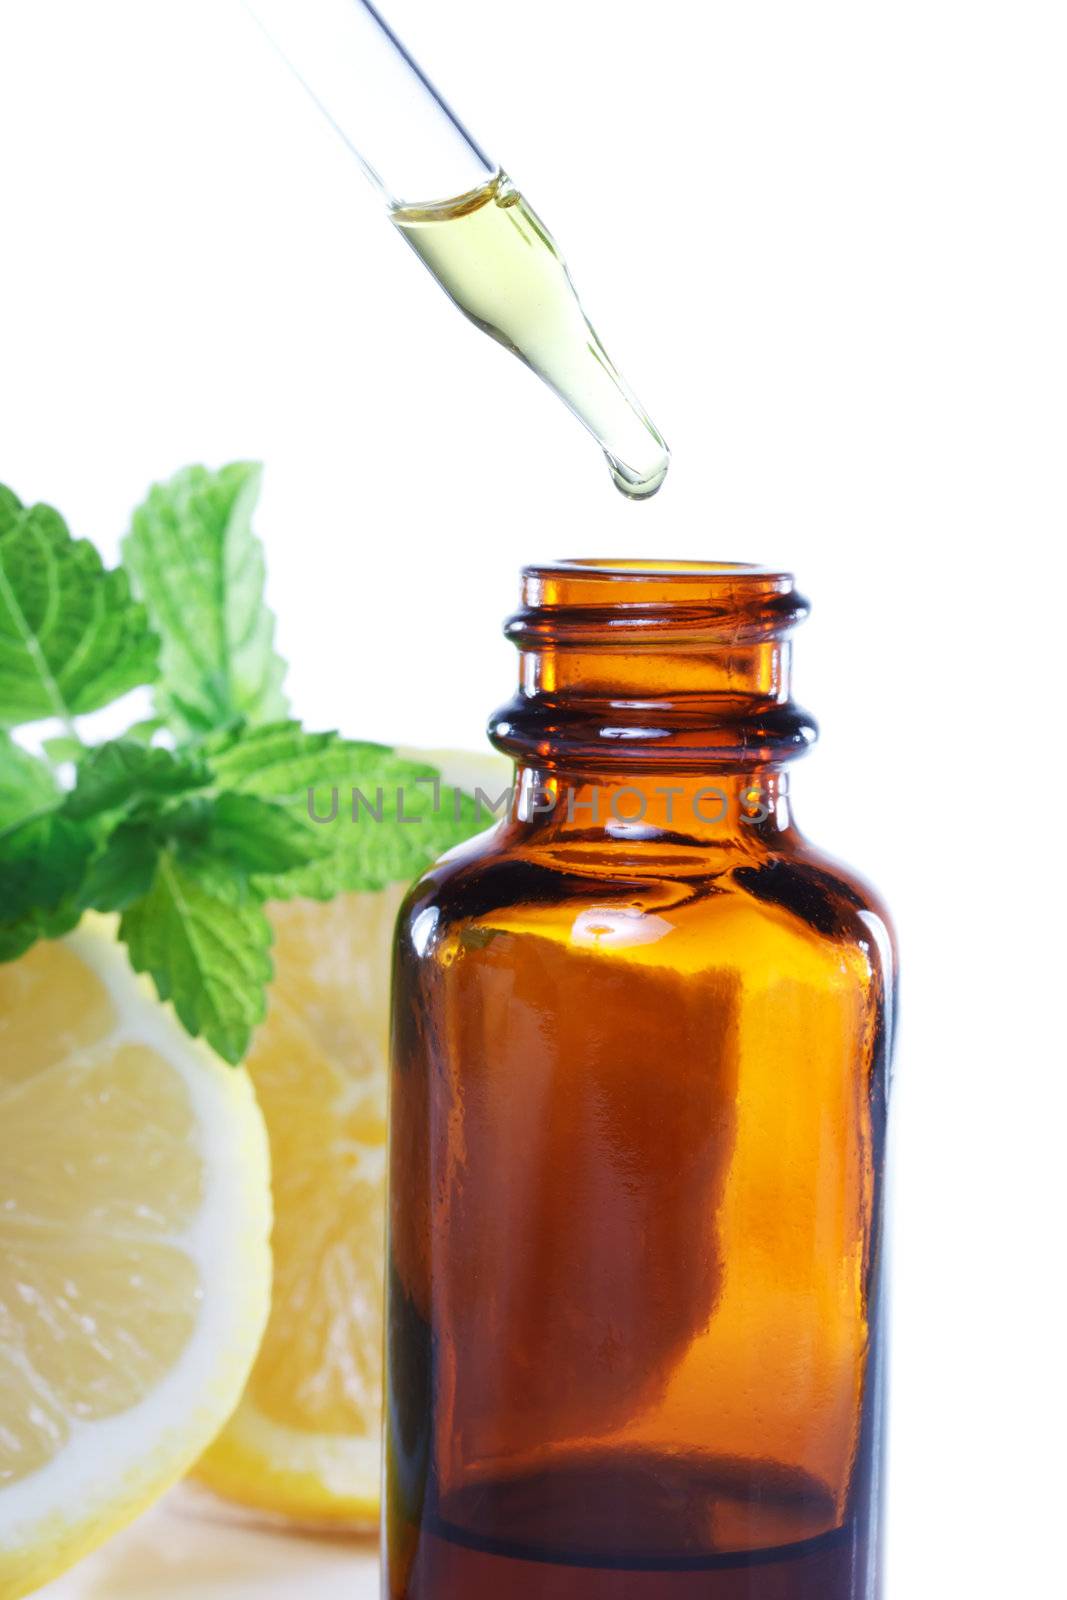 Herbal medicine dropper bottle with mint leaves and lemon